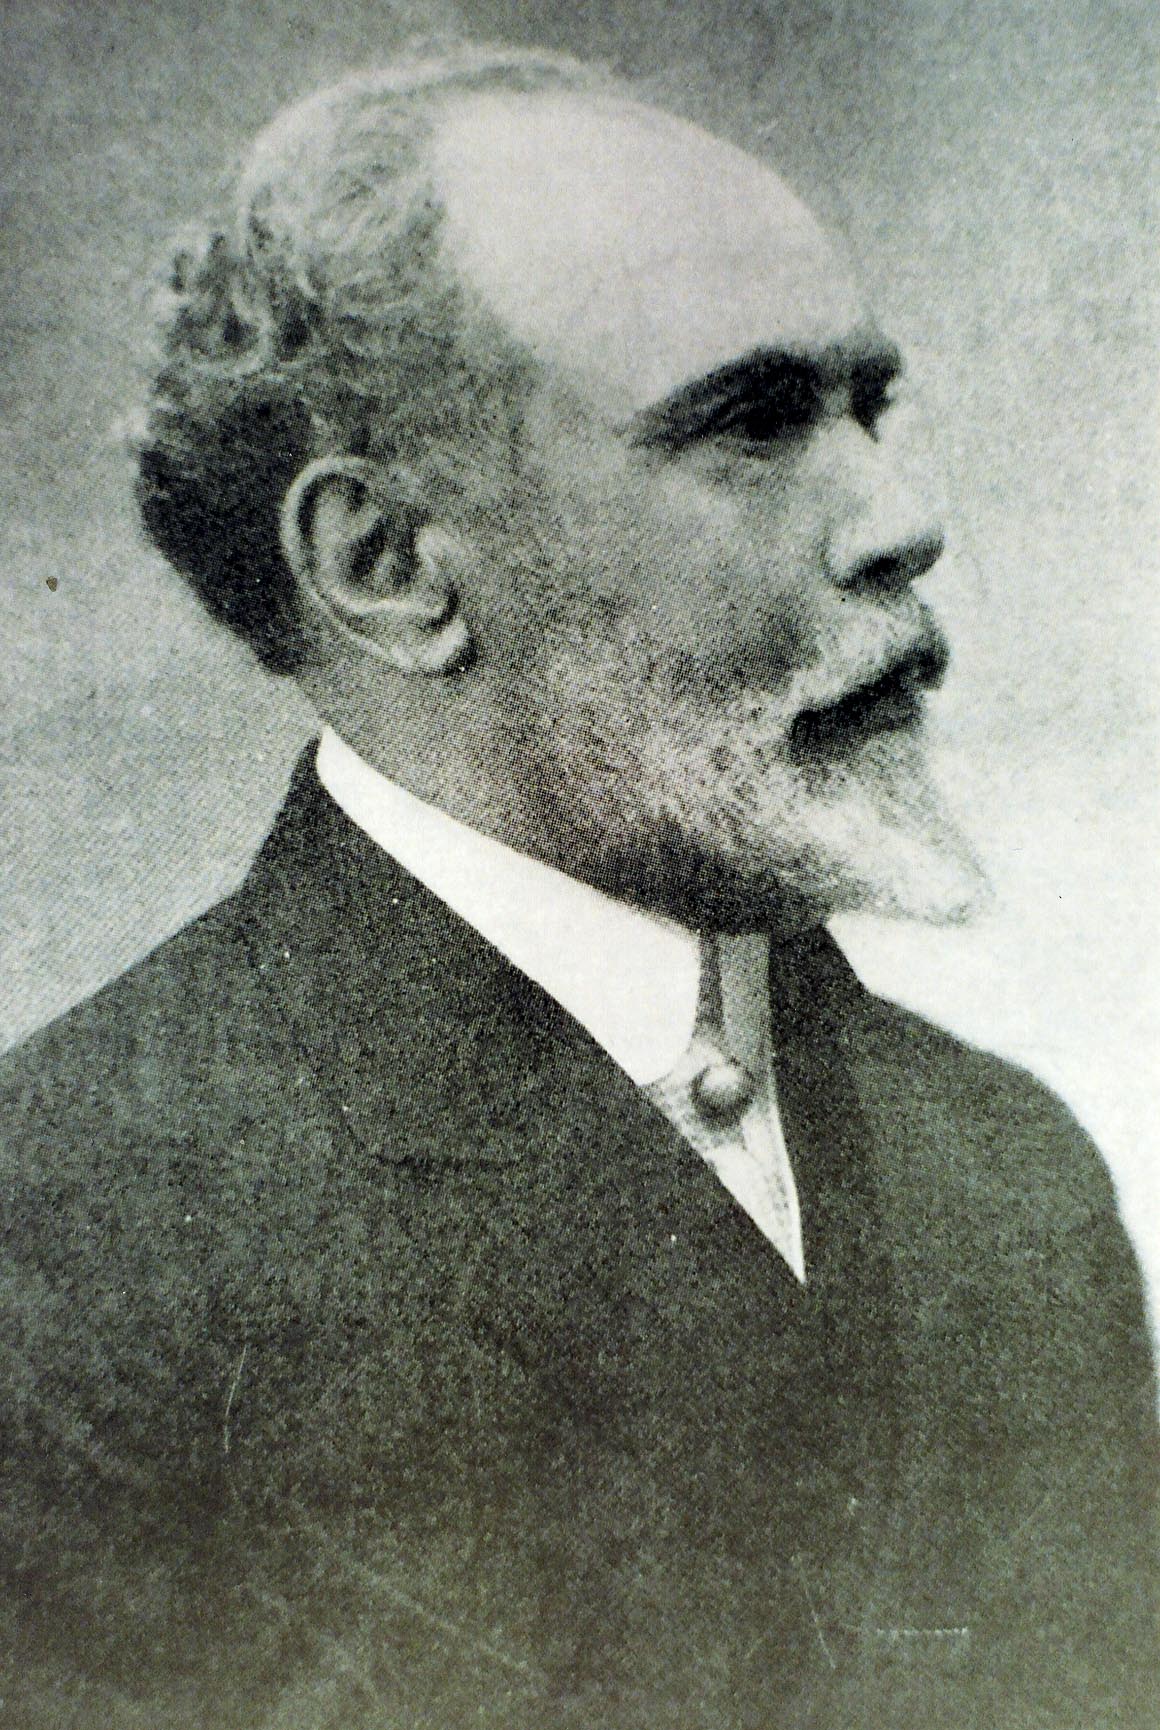 Ricardo Velázquez Bosco